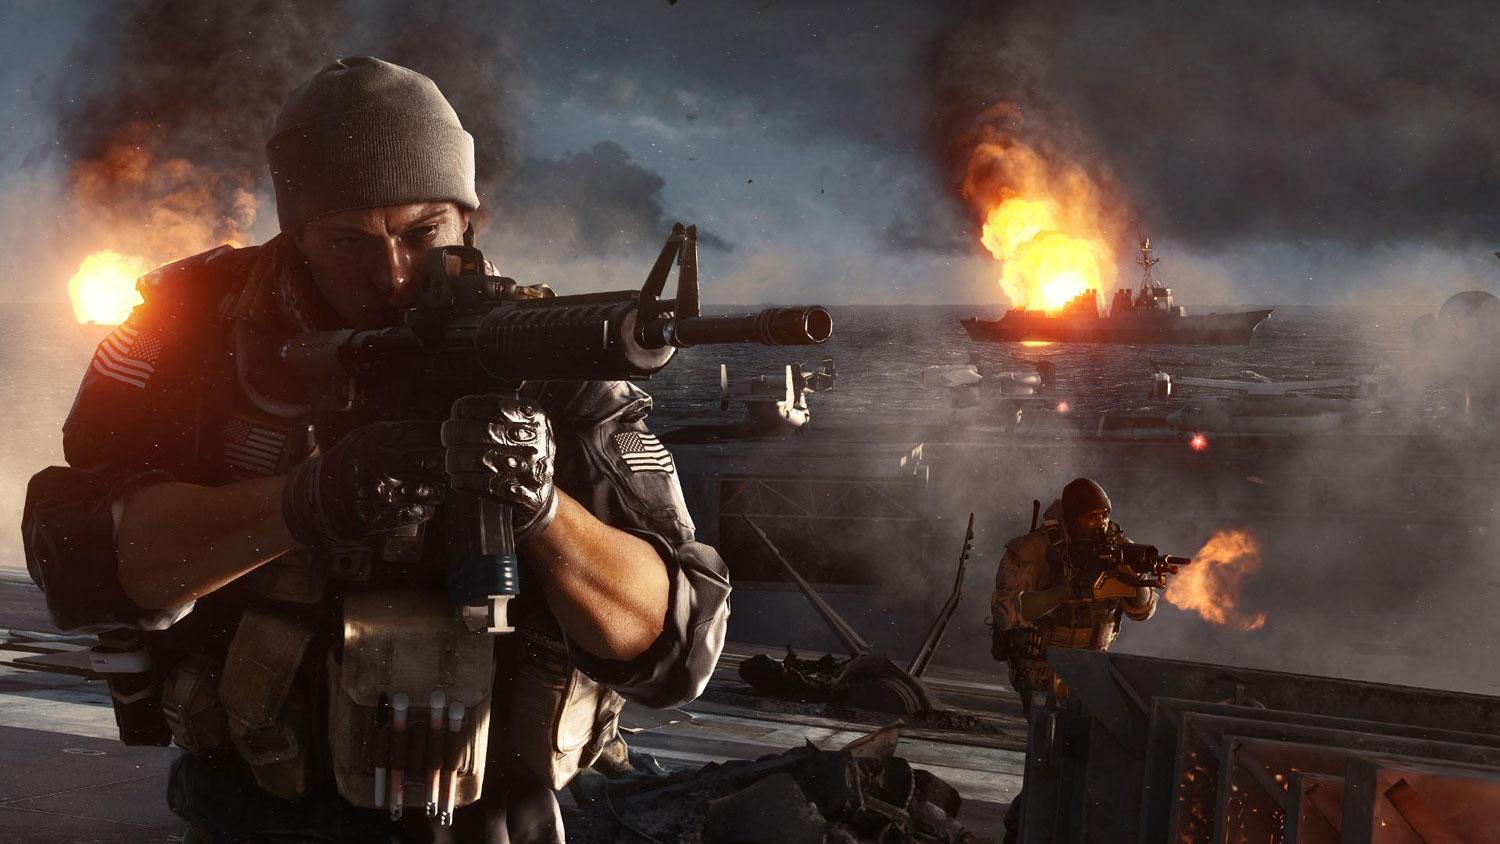 Battlefield 4 Security Exploit Crashes Servers: “No Free Commander